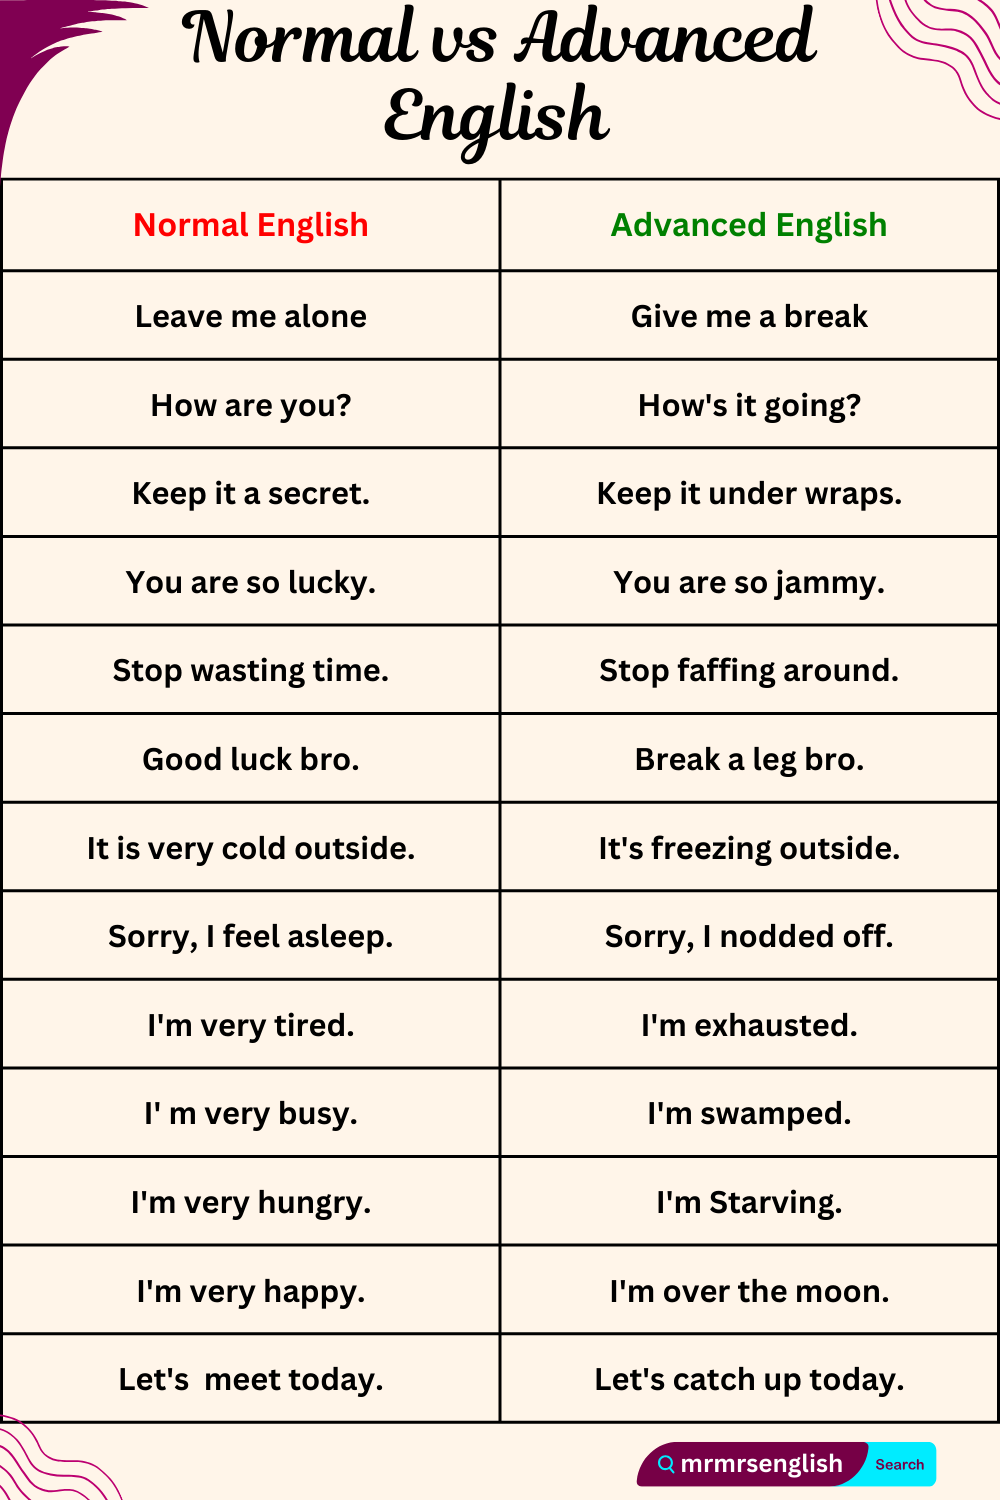 Daily Used Normal English vs Advanced English Sentences